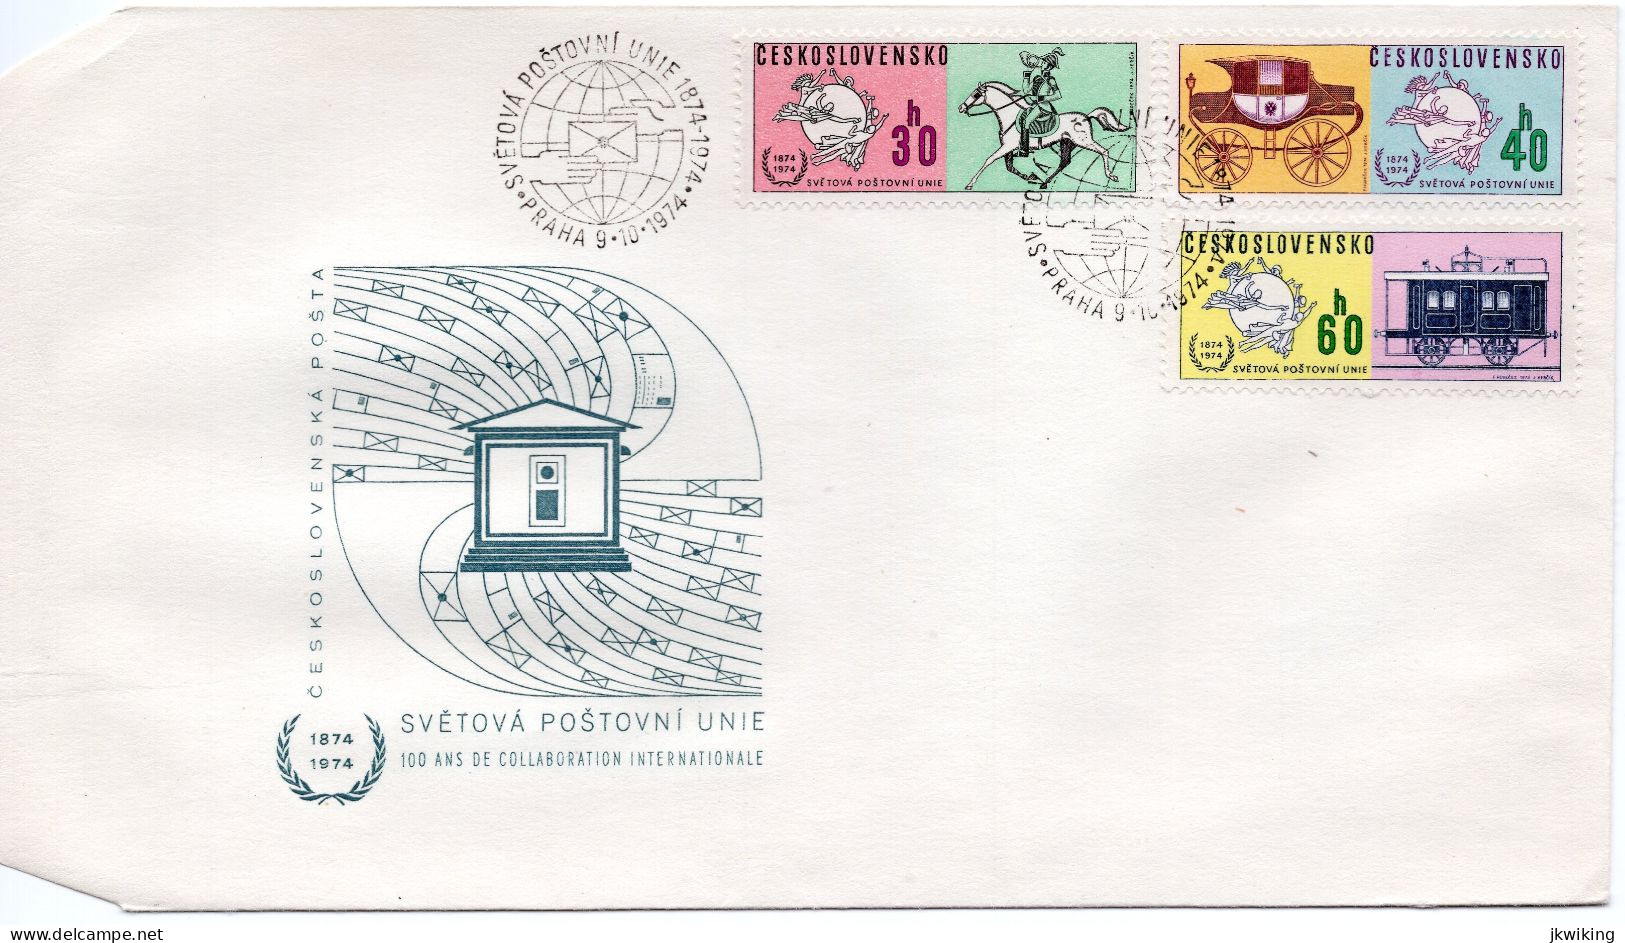 FDC 100 Years Universal Postal Union - Occasional Postage Stamp - Postal Car - Postal Train - Poste